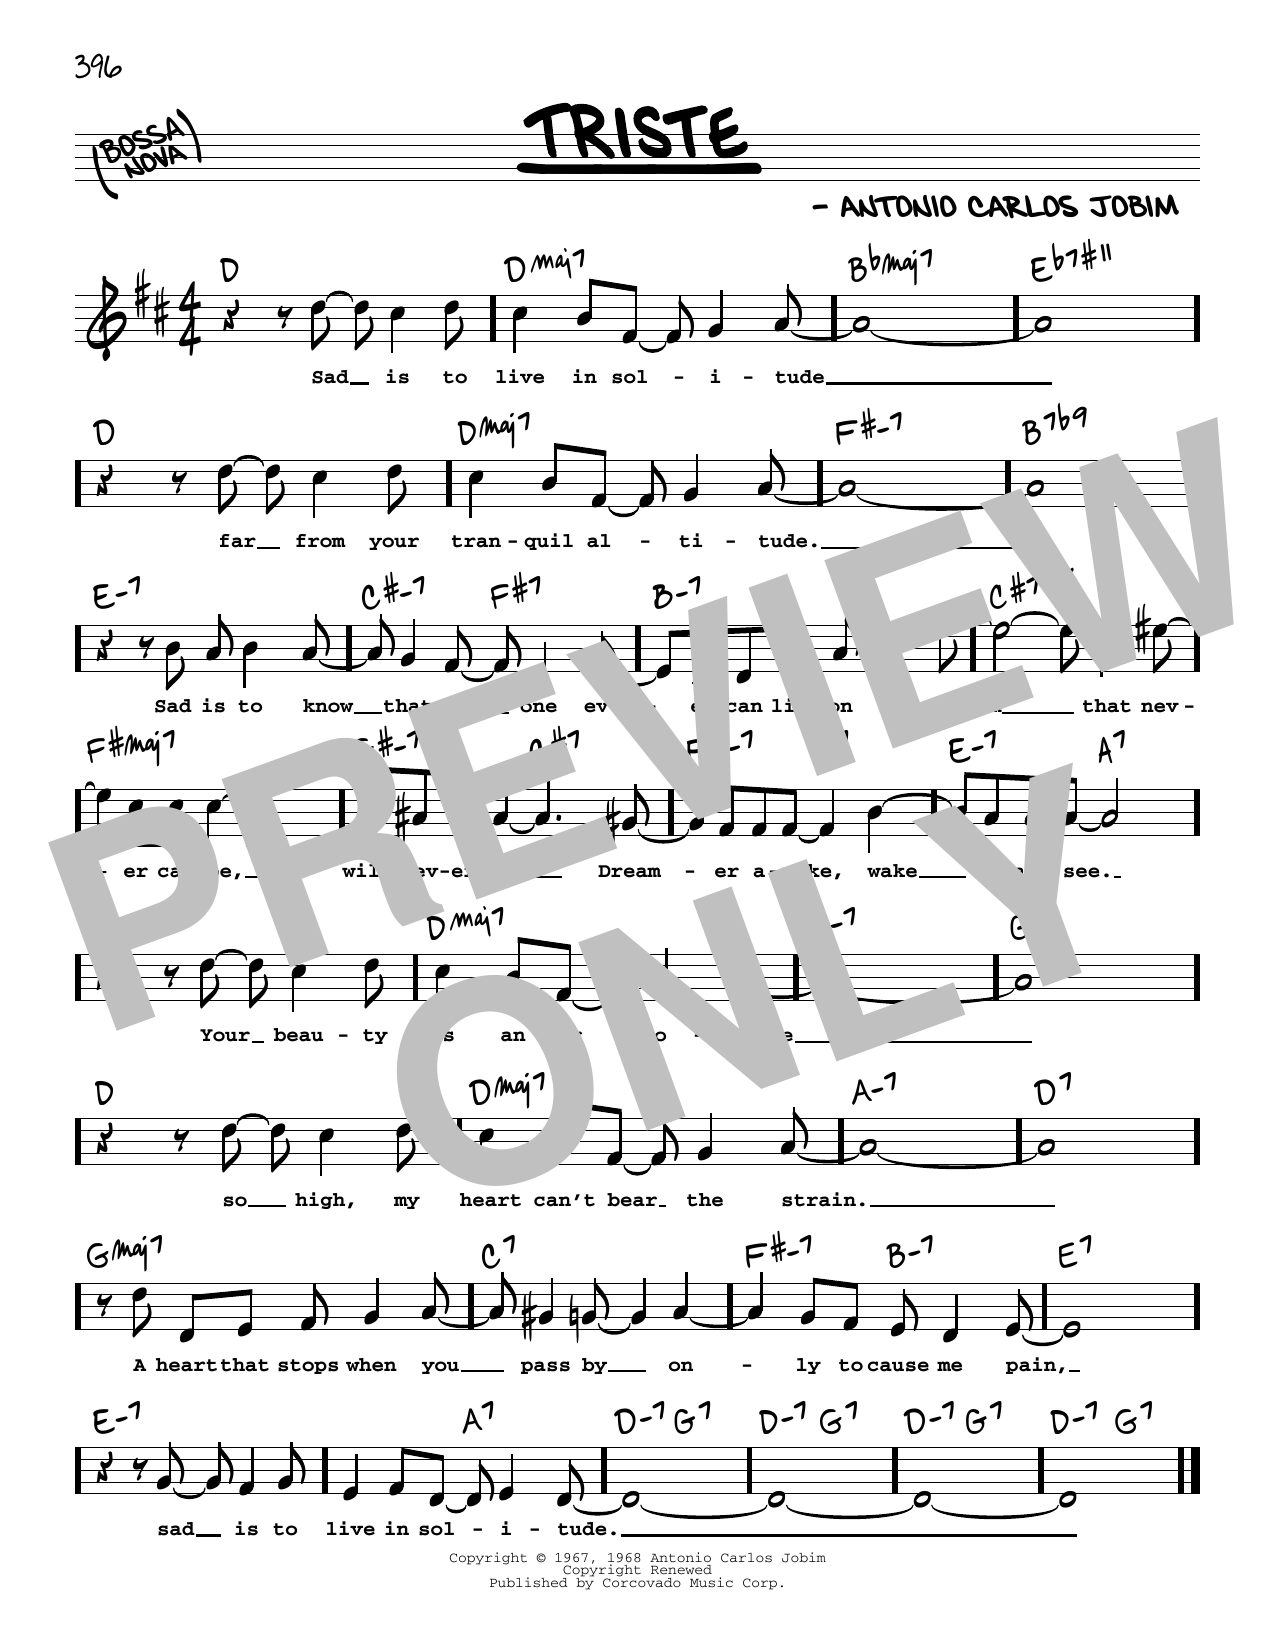 Antonio Carlos Jobim Triste (High Voice) Sheet Music Notes & Chords for Real Book – Melody, Lyrics & Chords - Download or Print PDF